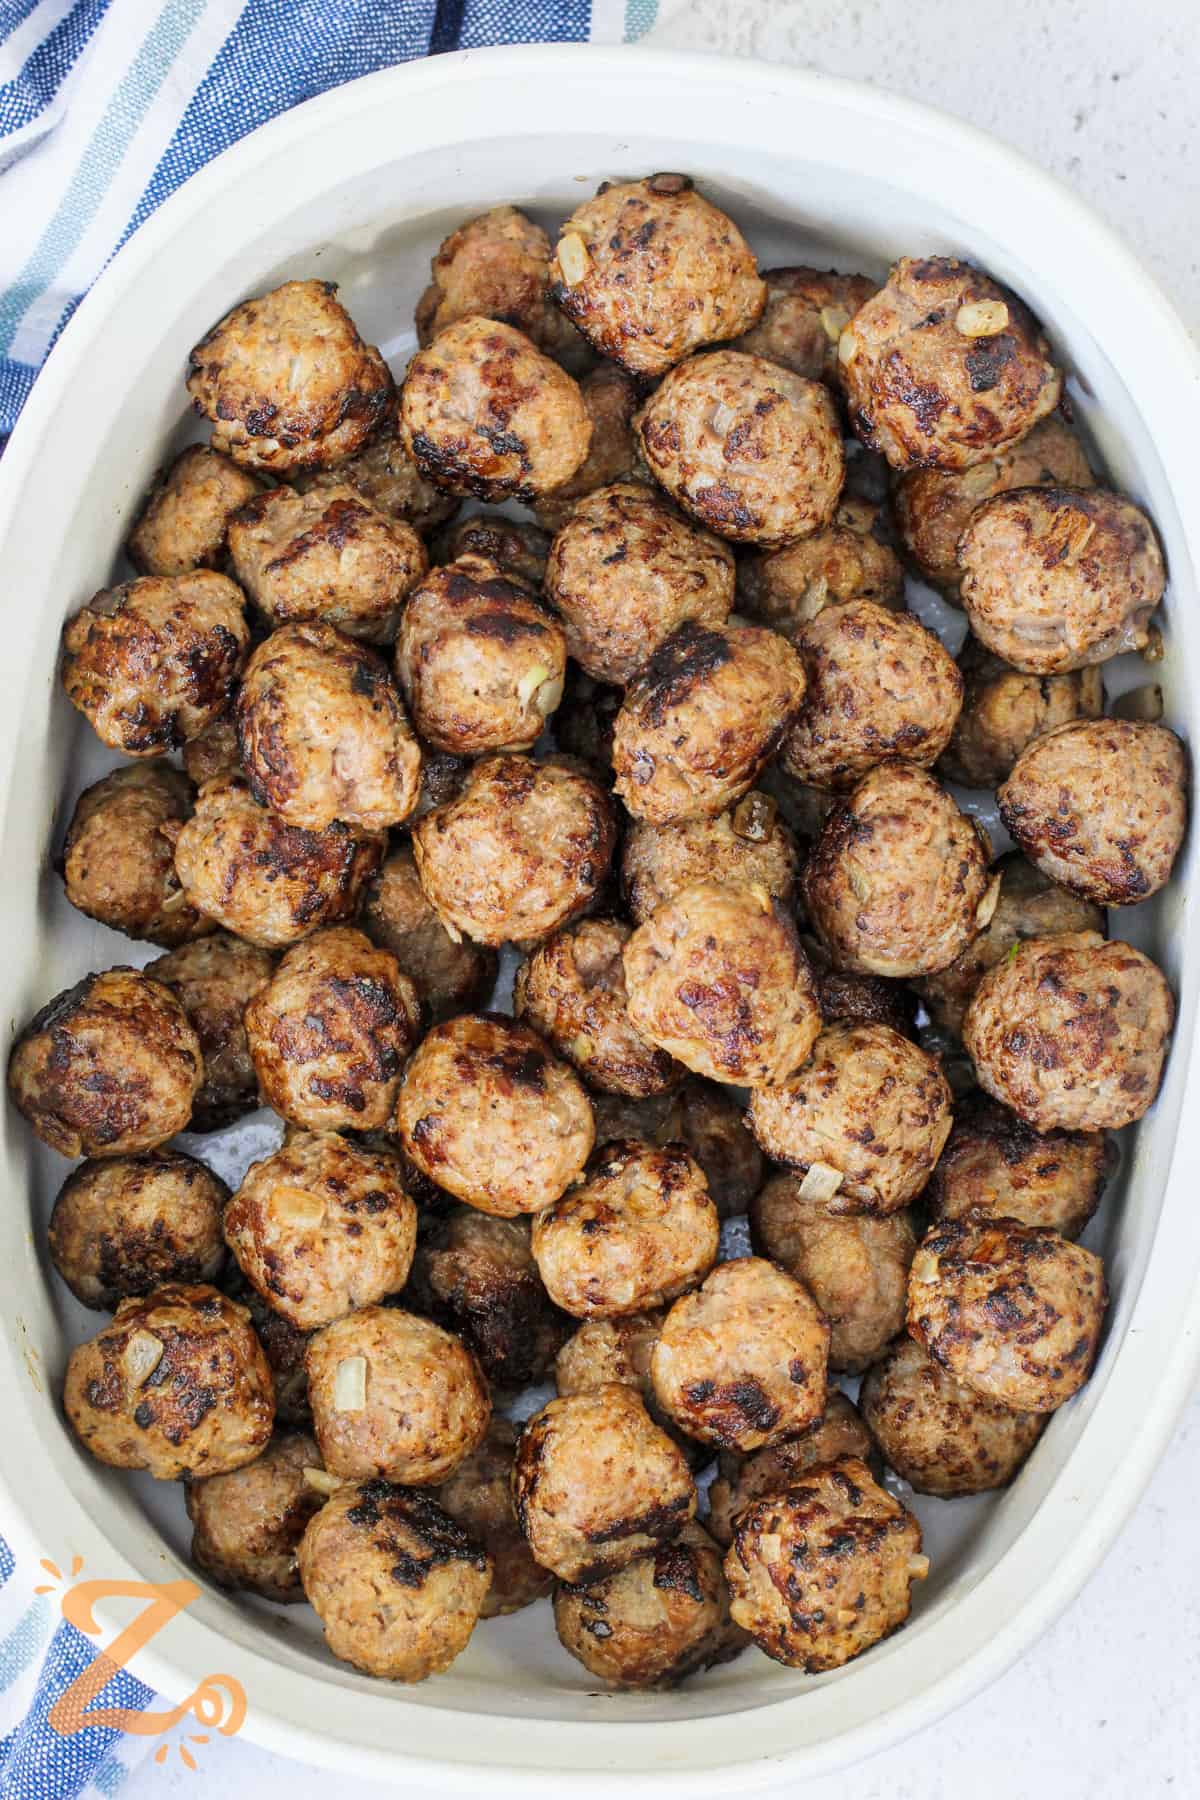 Swedish Meatballs in a dish